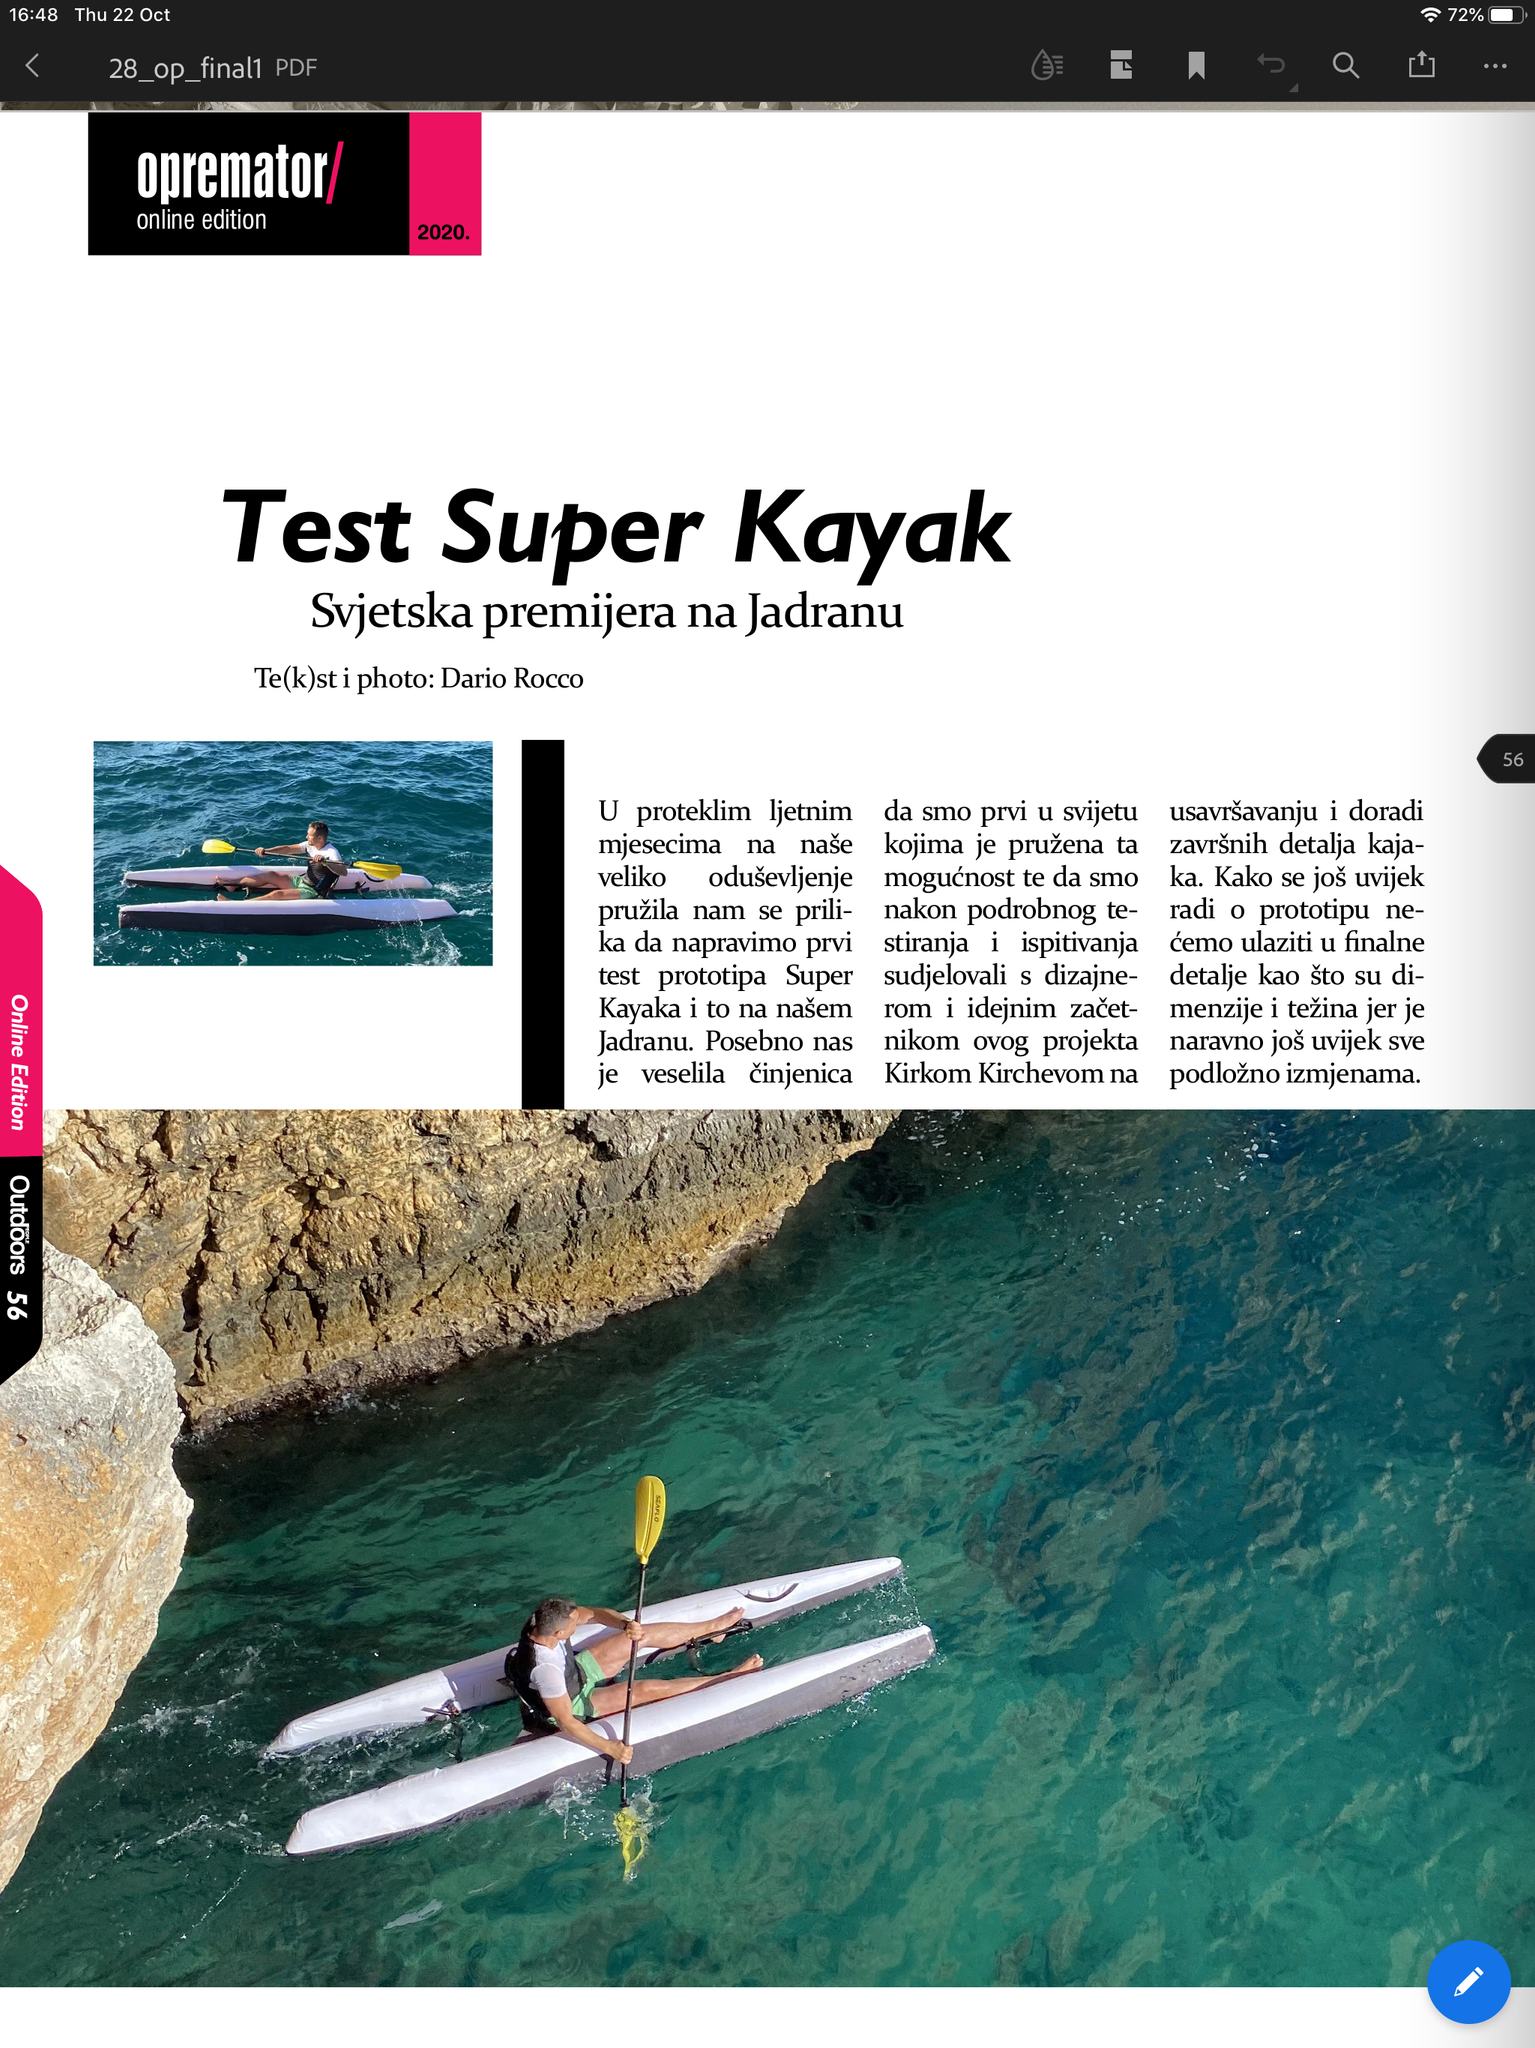 Outside People mag - reviews Super Kayak